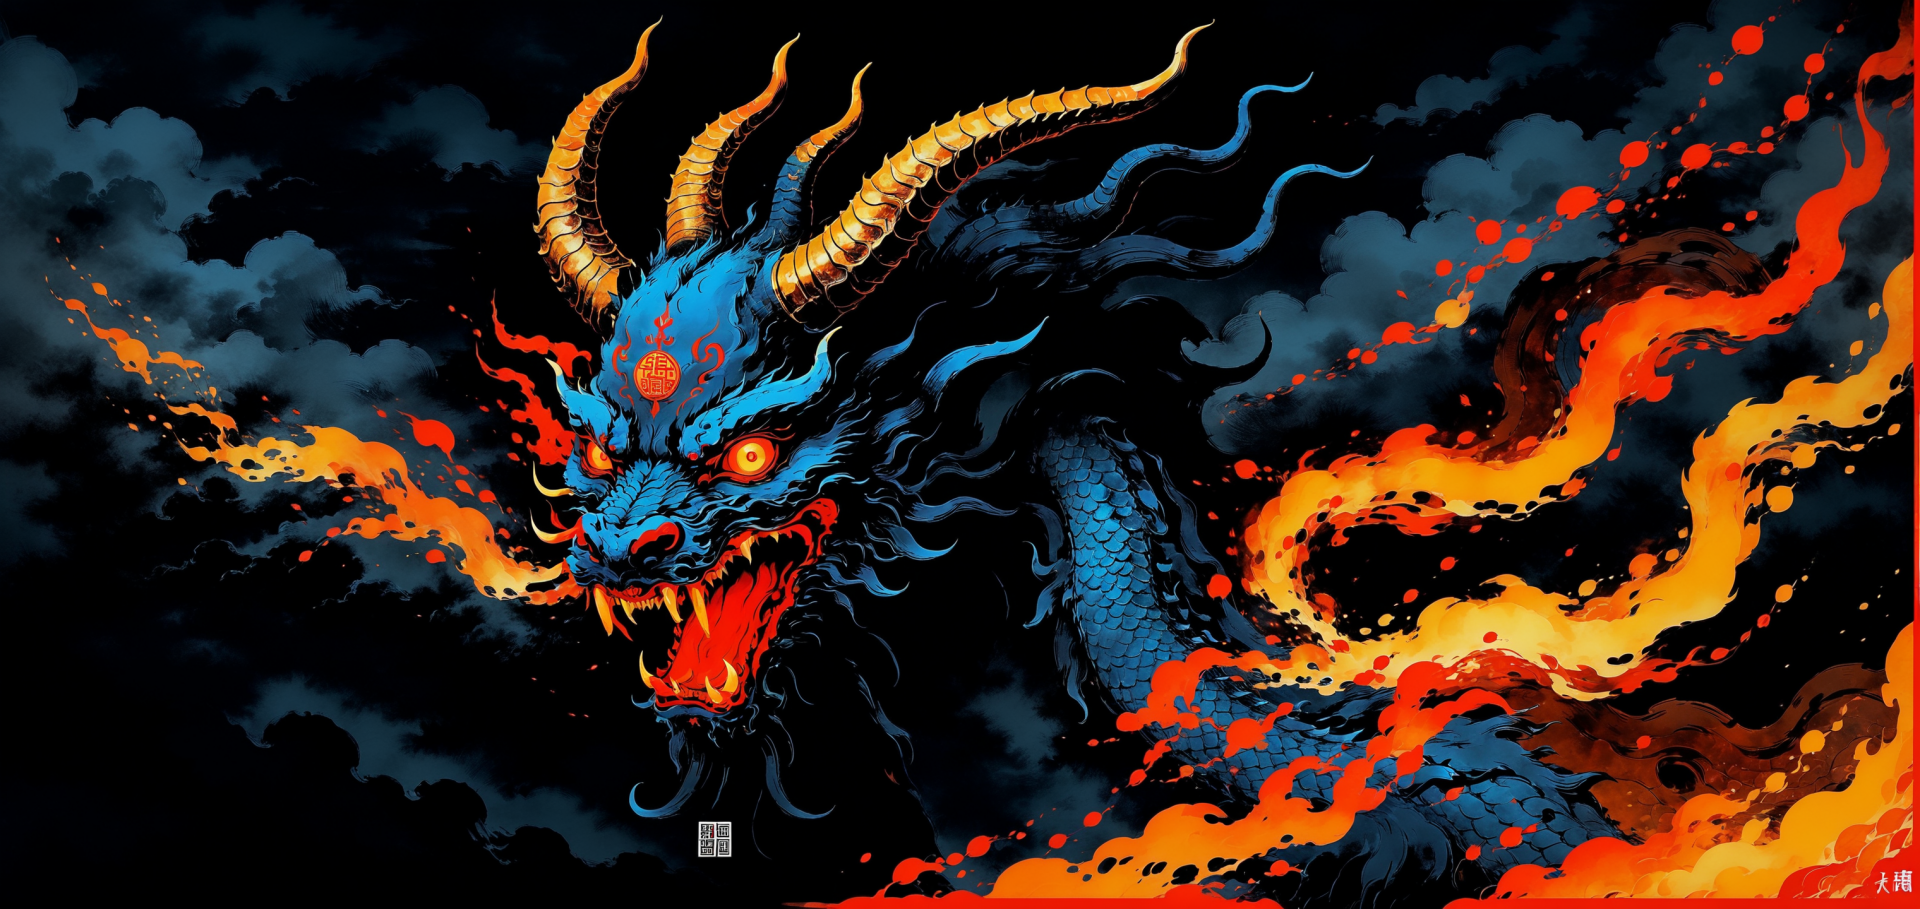 Fantasy creature dragon mythical beast demonic sharp teeth claws ...